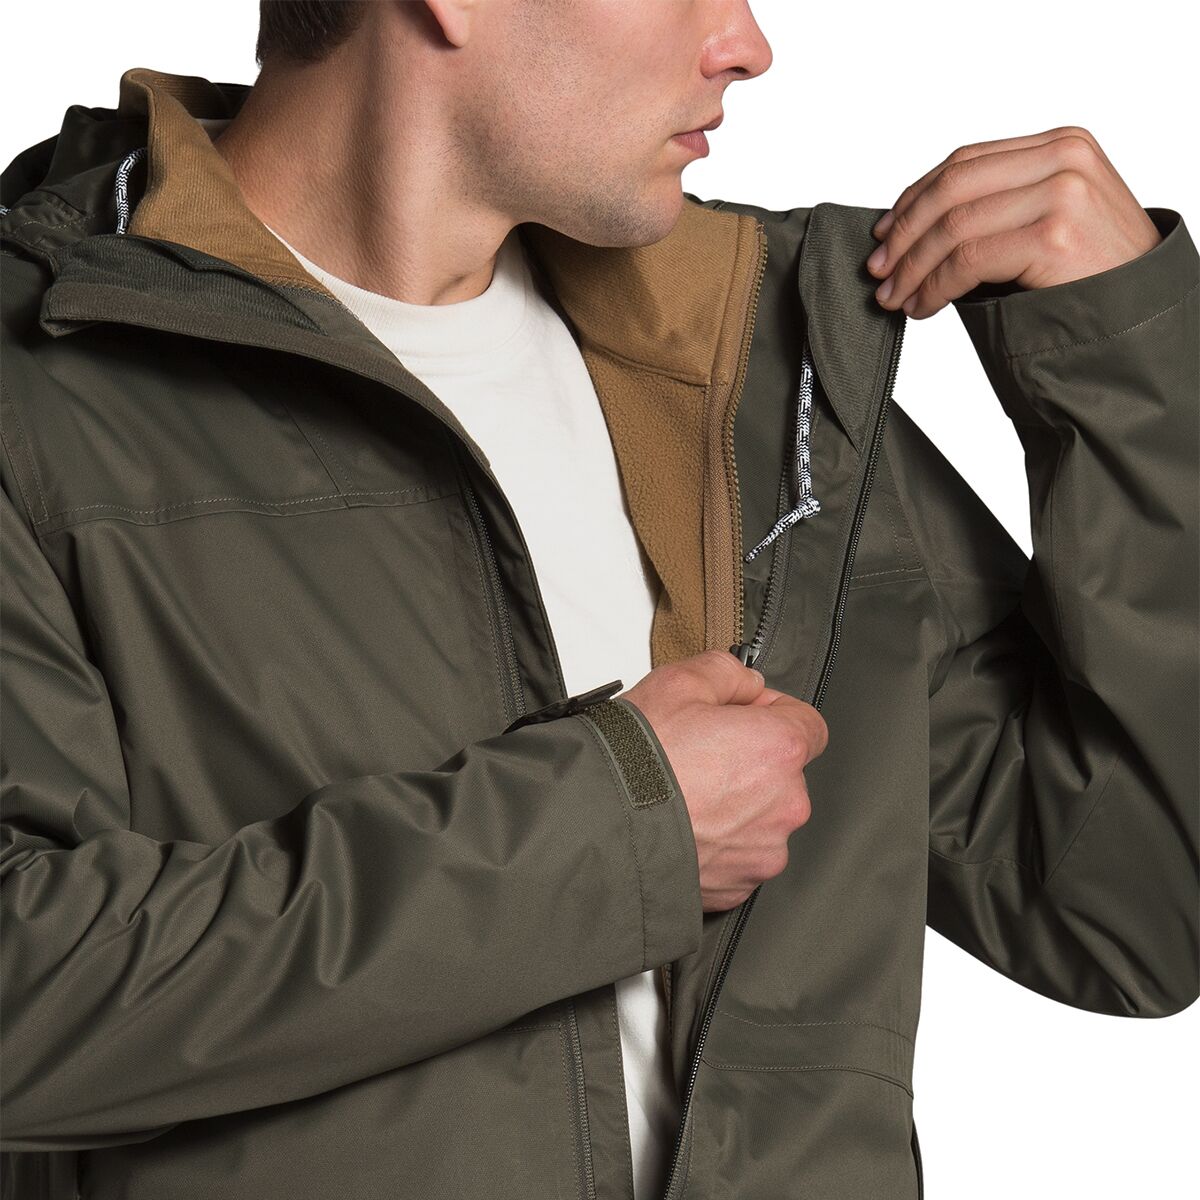 men's arrowood triclimate jacket review